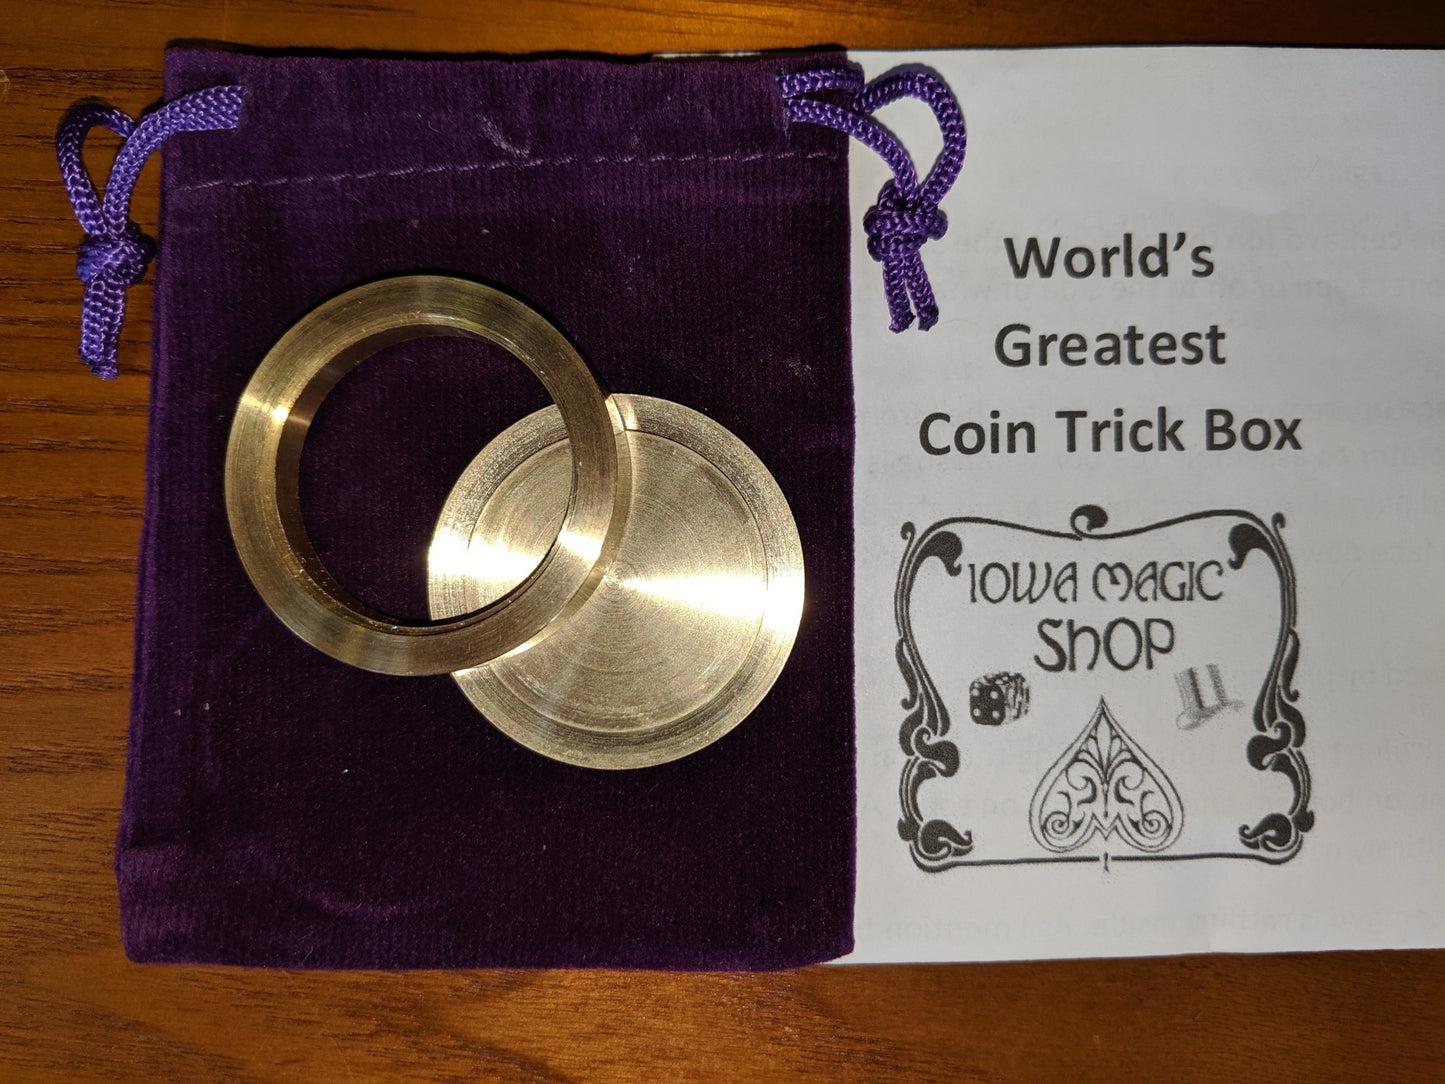 The World's Greatest Coin Trick Box by Iowa Magic Shop